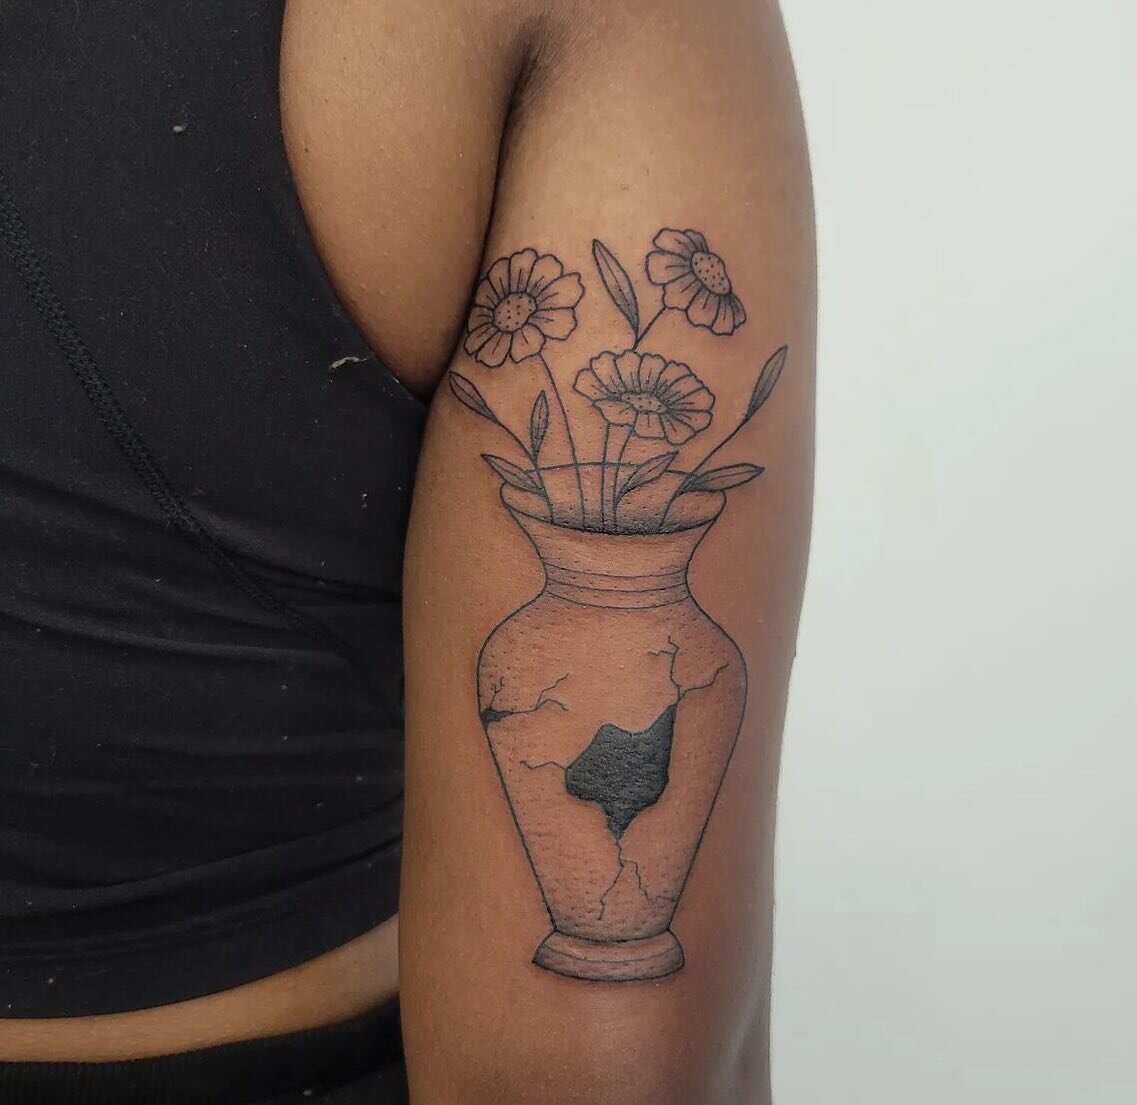 Tattoos by: @_sarahdoesartstuff_ 

#blacklistink#blacklistinktattoo#tattoocollective#tattoostudio#tattooshop#tattooartist#tattoo#inked#jomo#creativecommunity